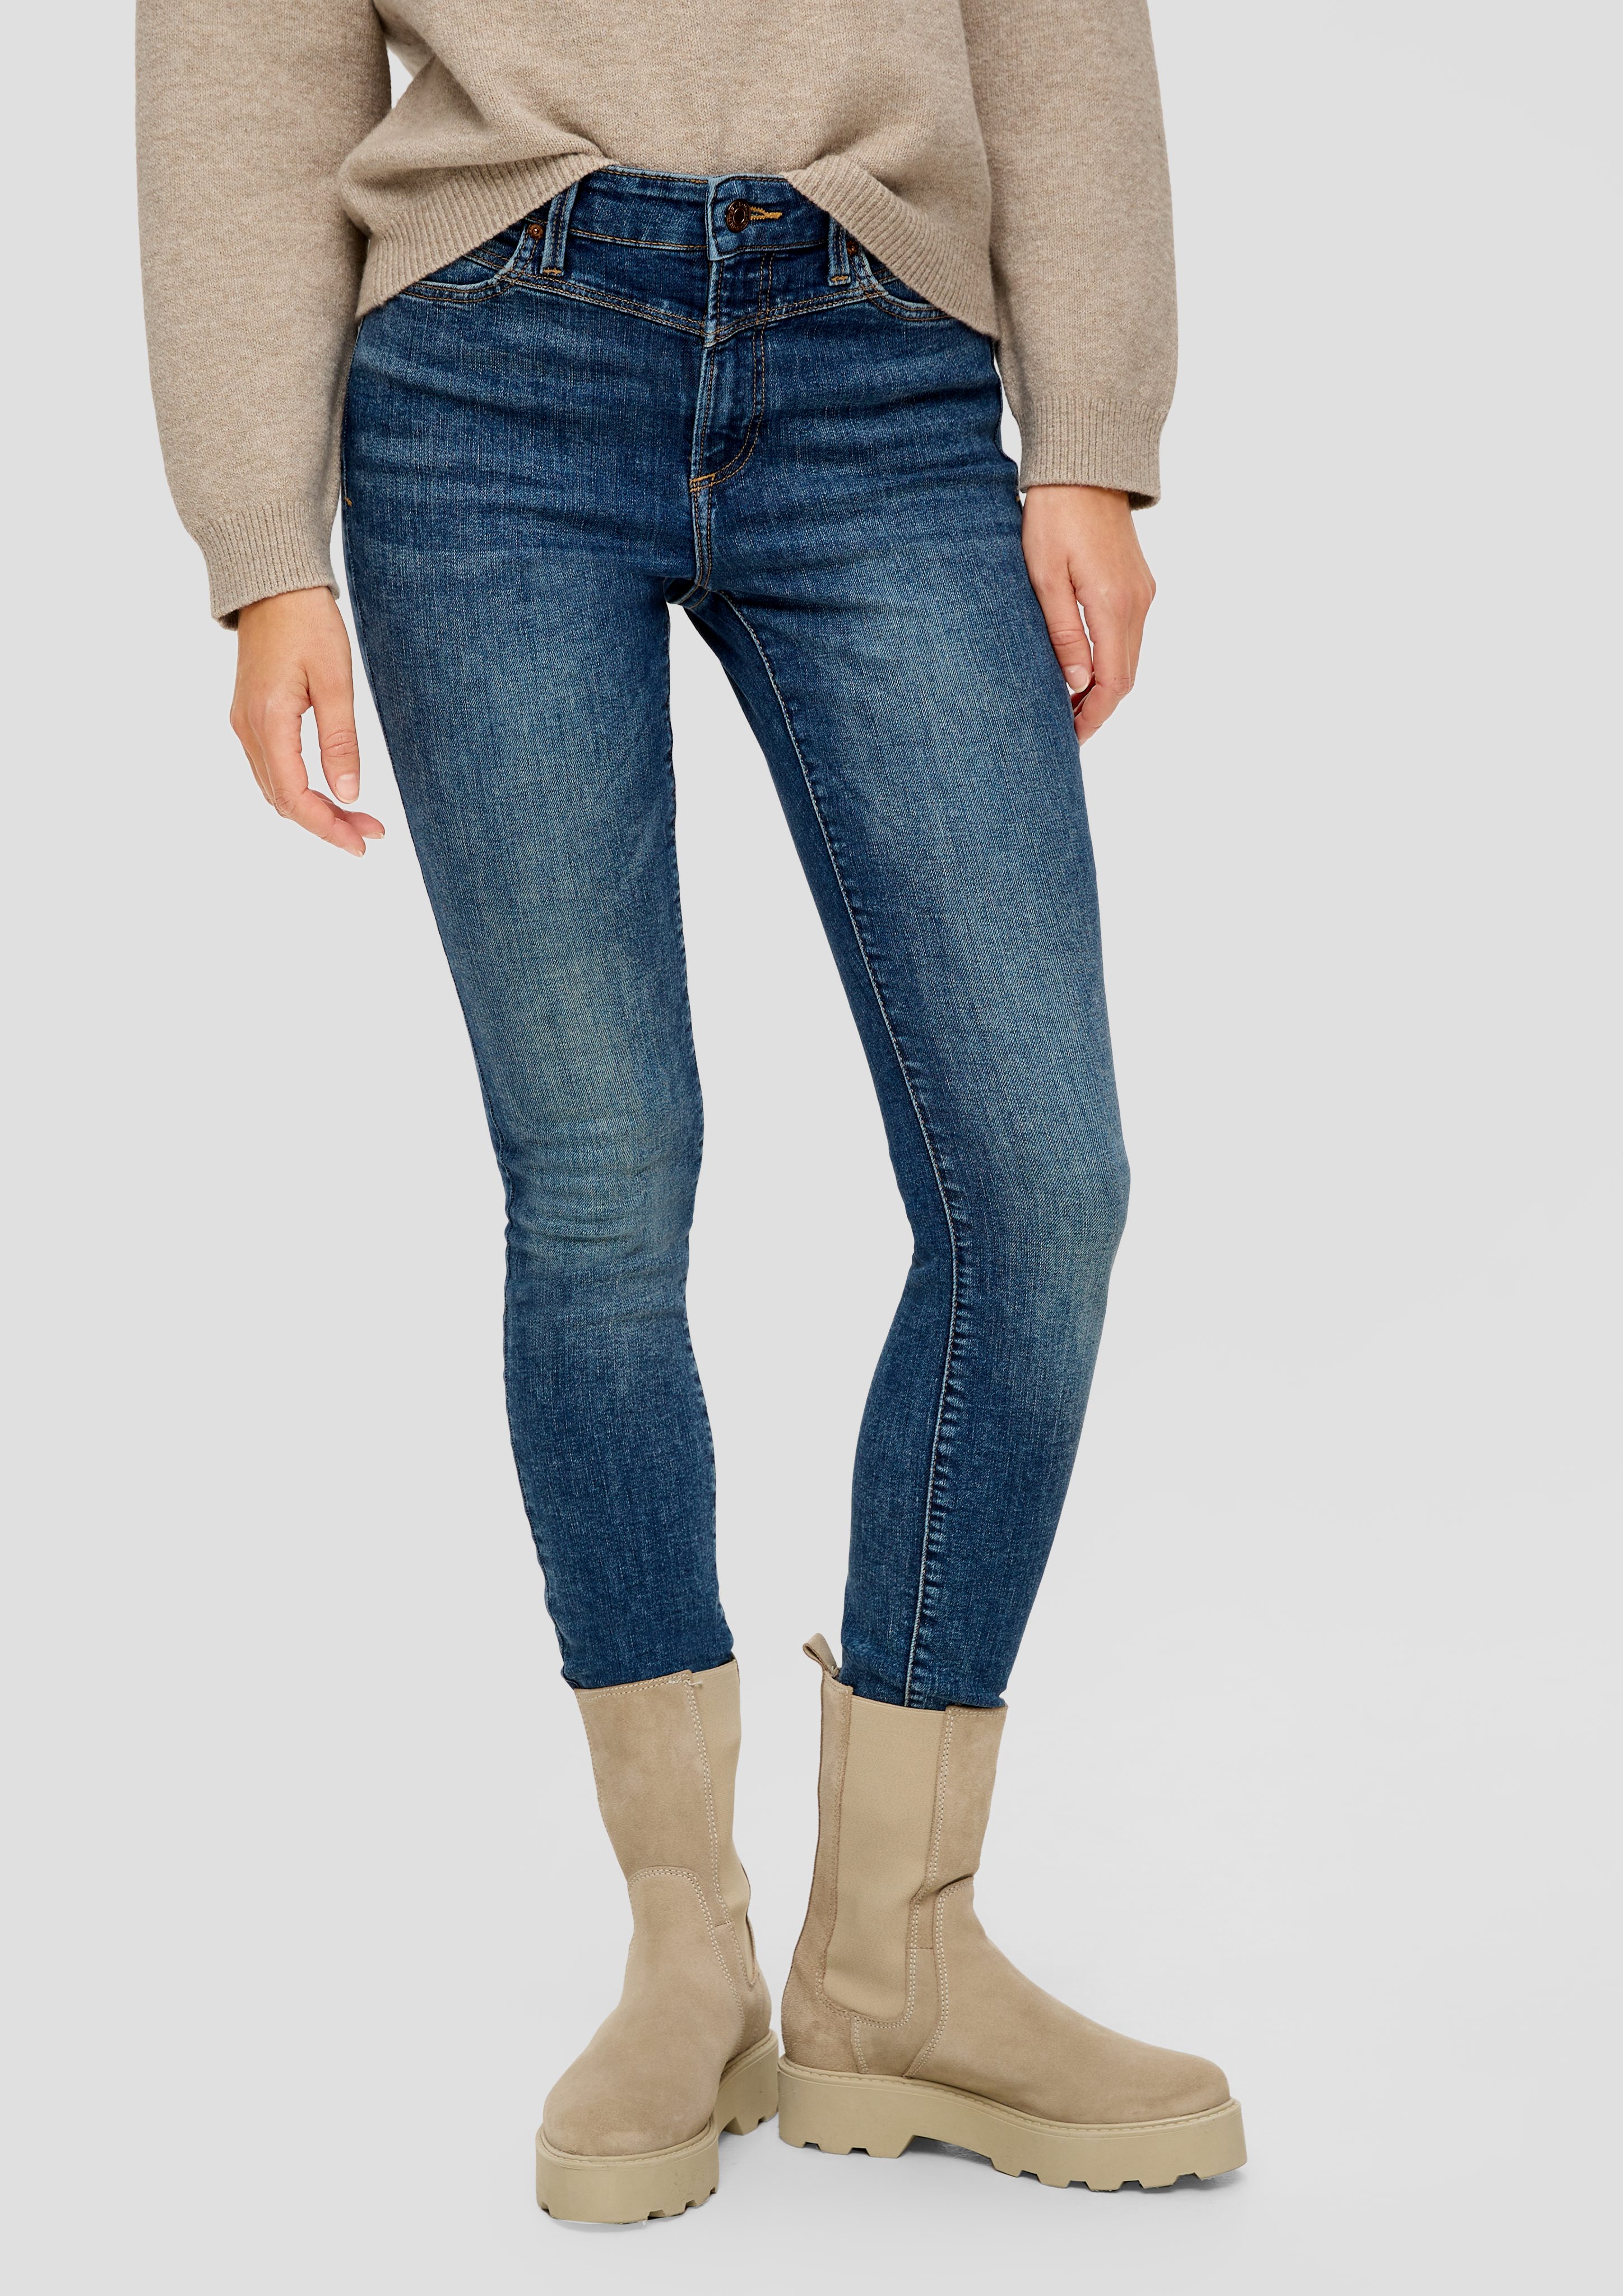 Rise Mid Skinny / Izabell Fit Jeans 5-Pocket-Jeans / s.Oliver / Leg Skinny